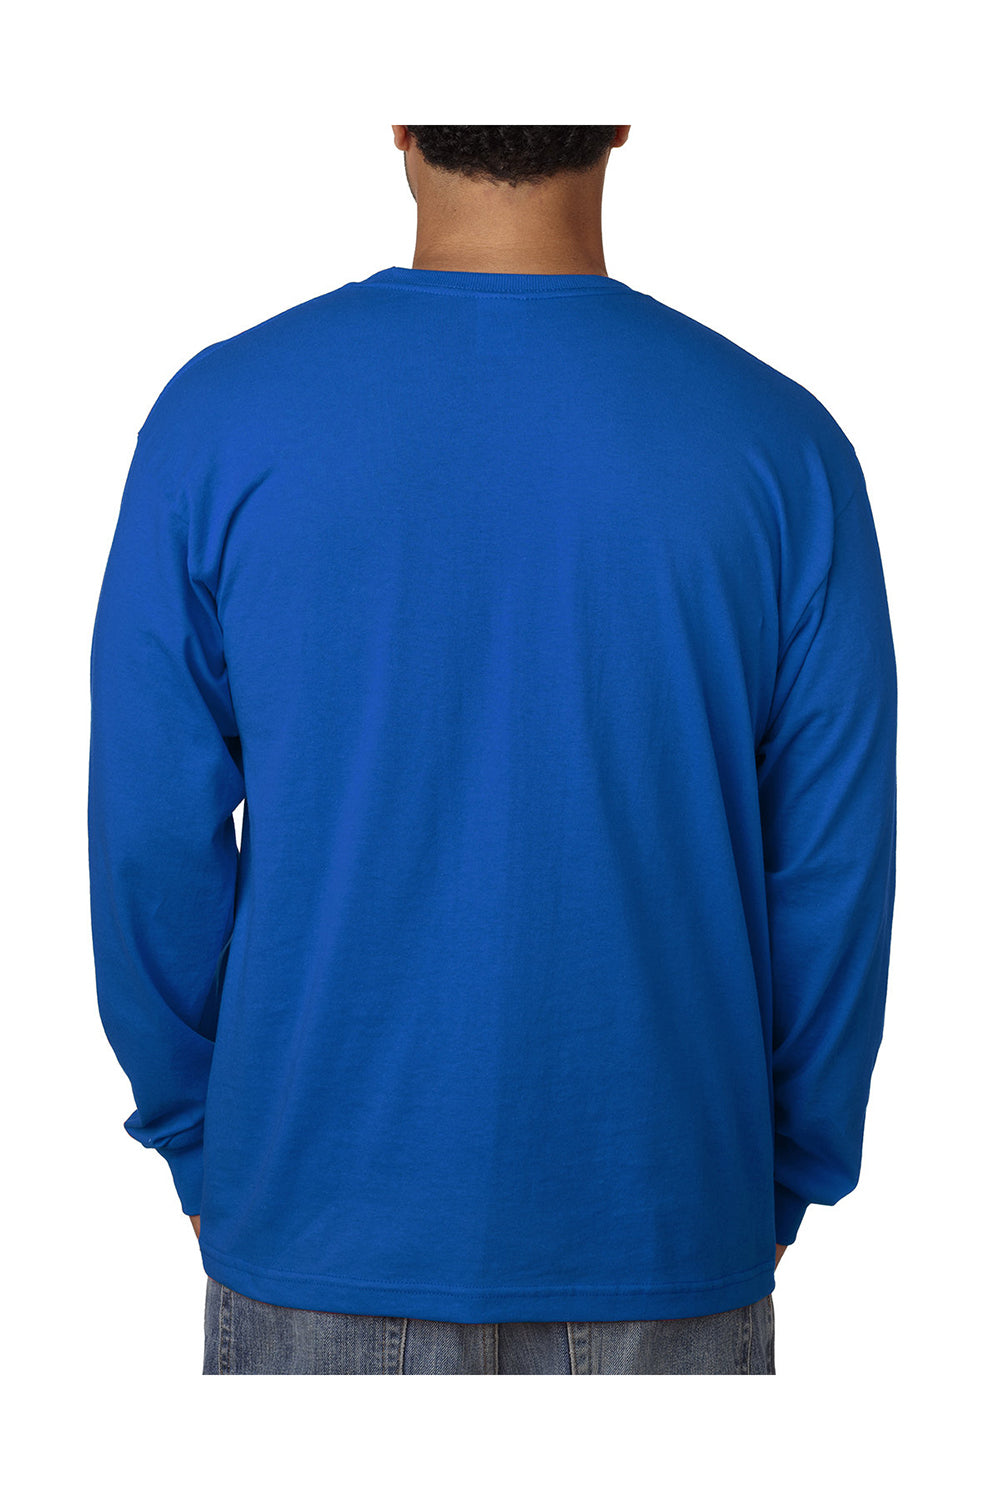 Bayside BA5060 Mens USA Made Long Sleeve Crewneck T-Shirt Royal Blue Model Back